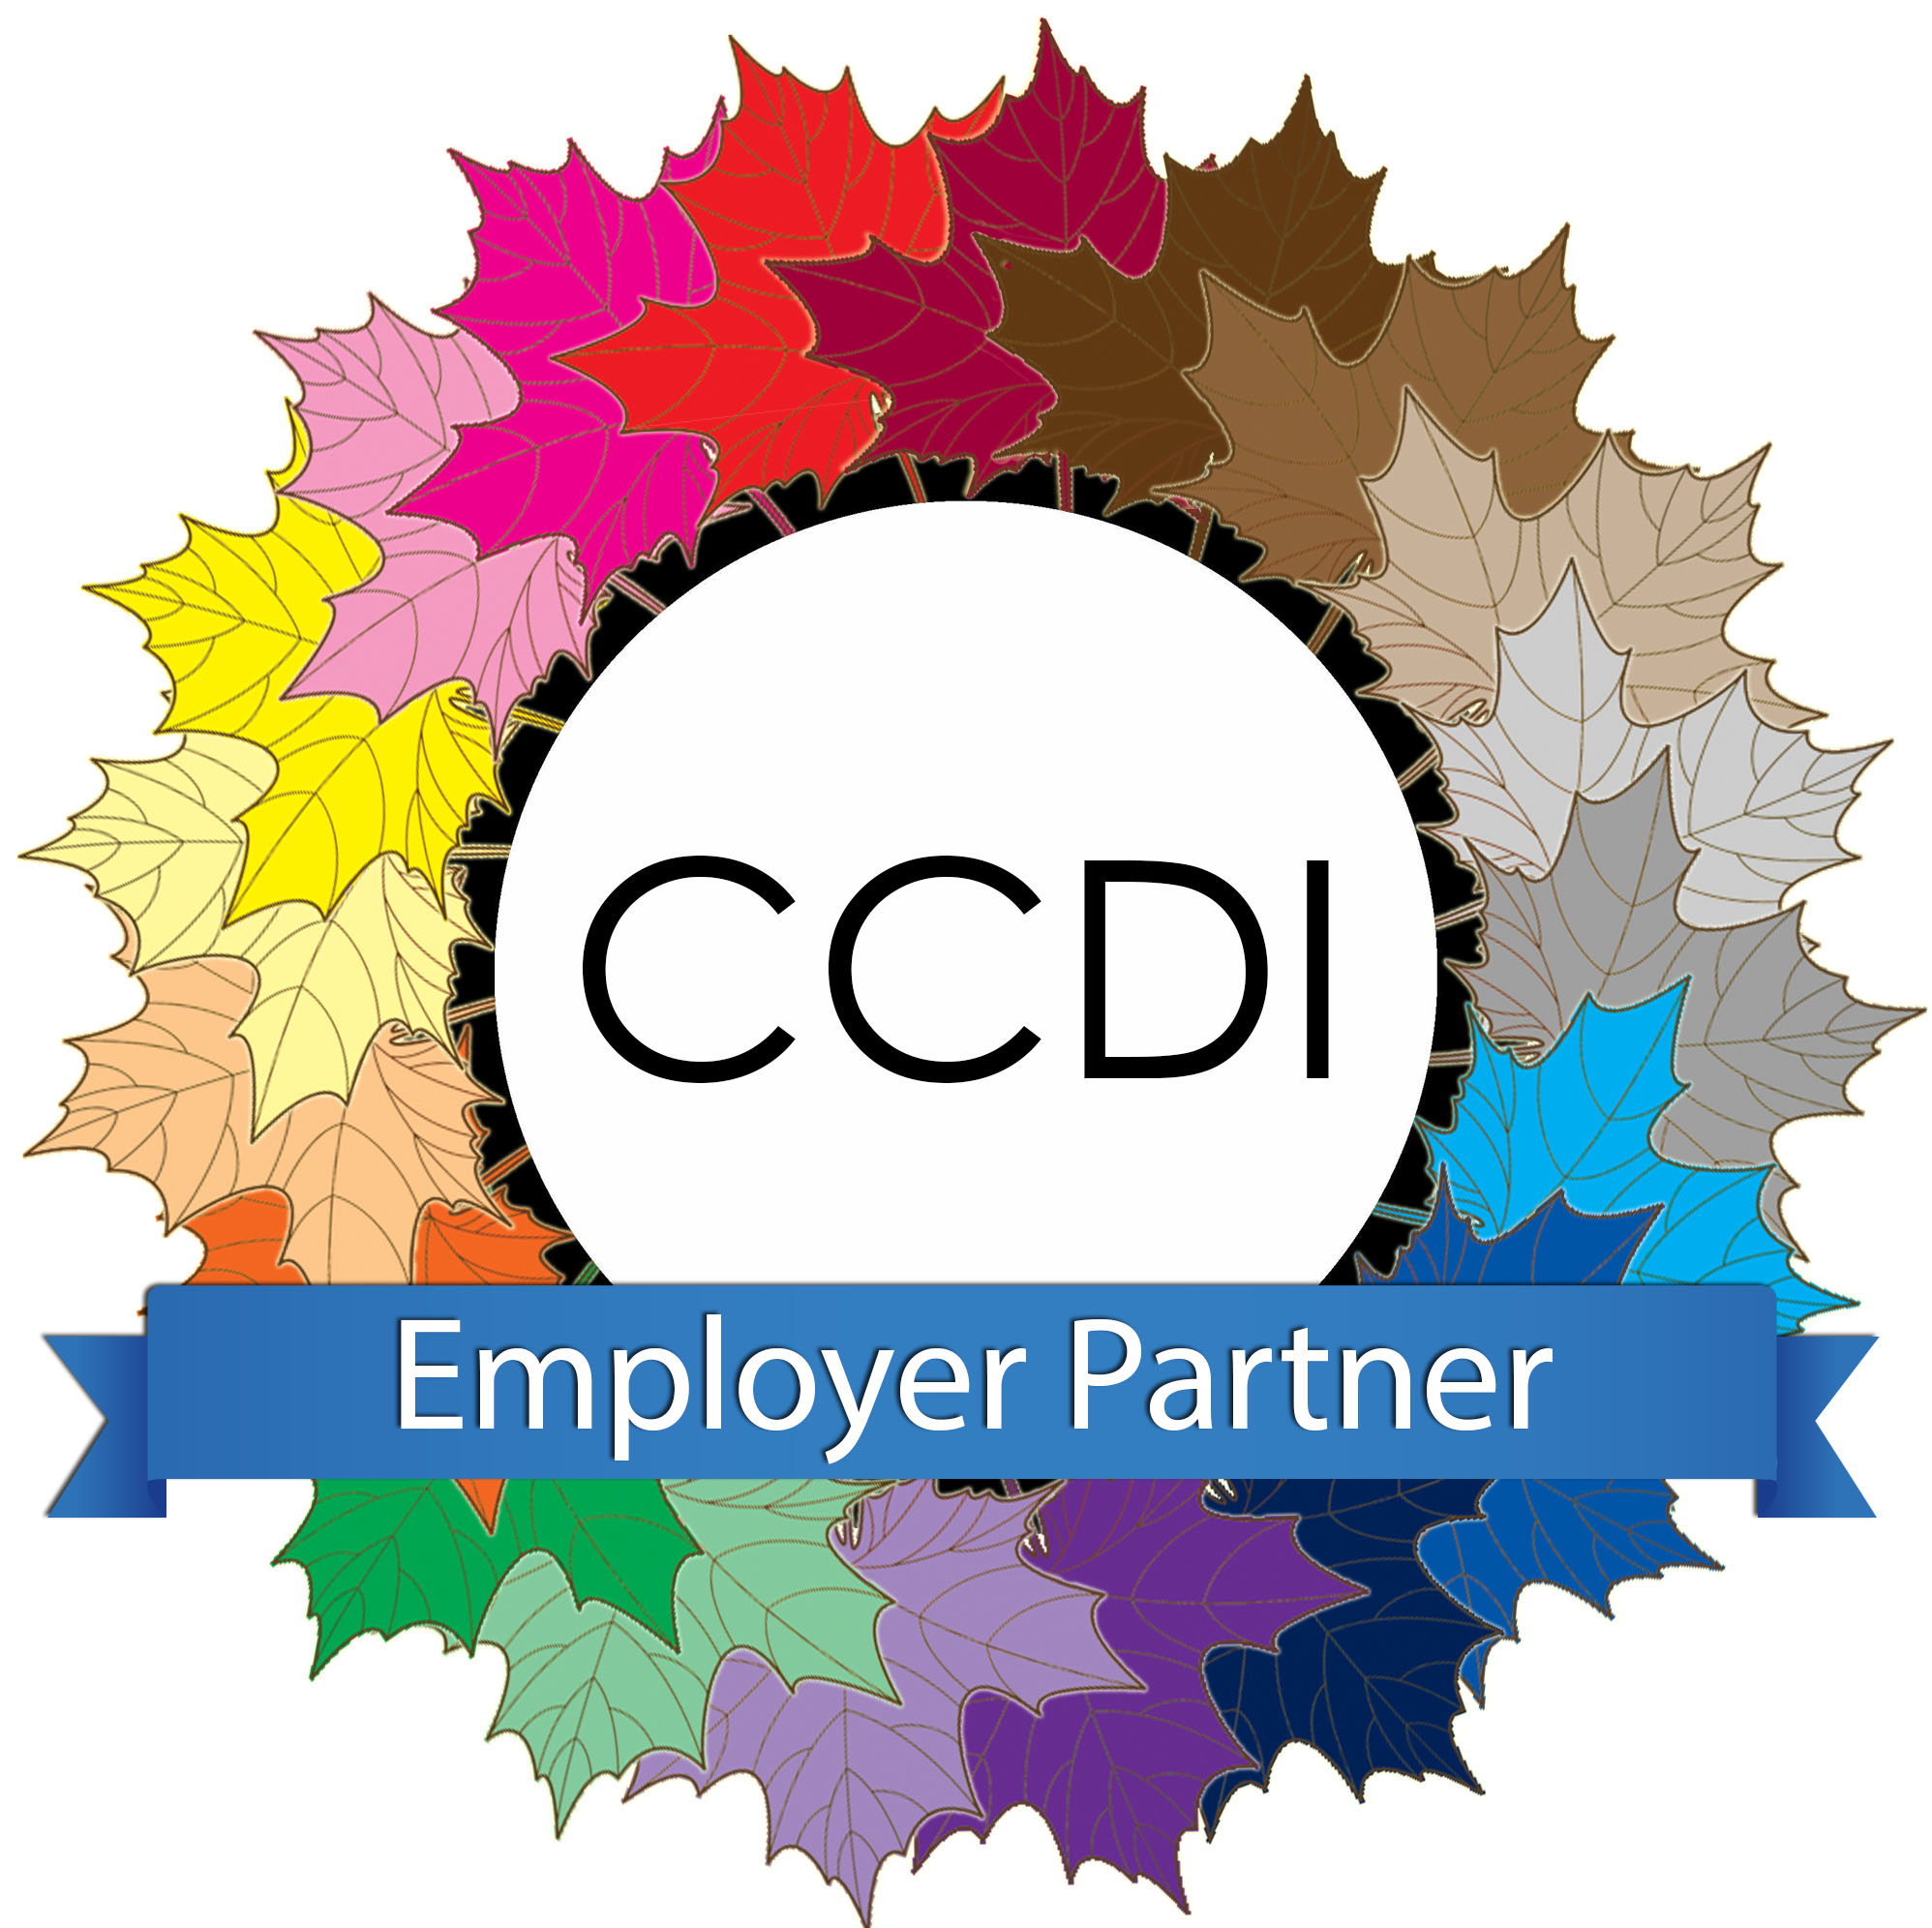 CCDI - Employer Partner